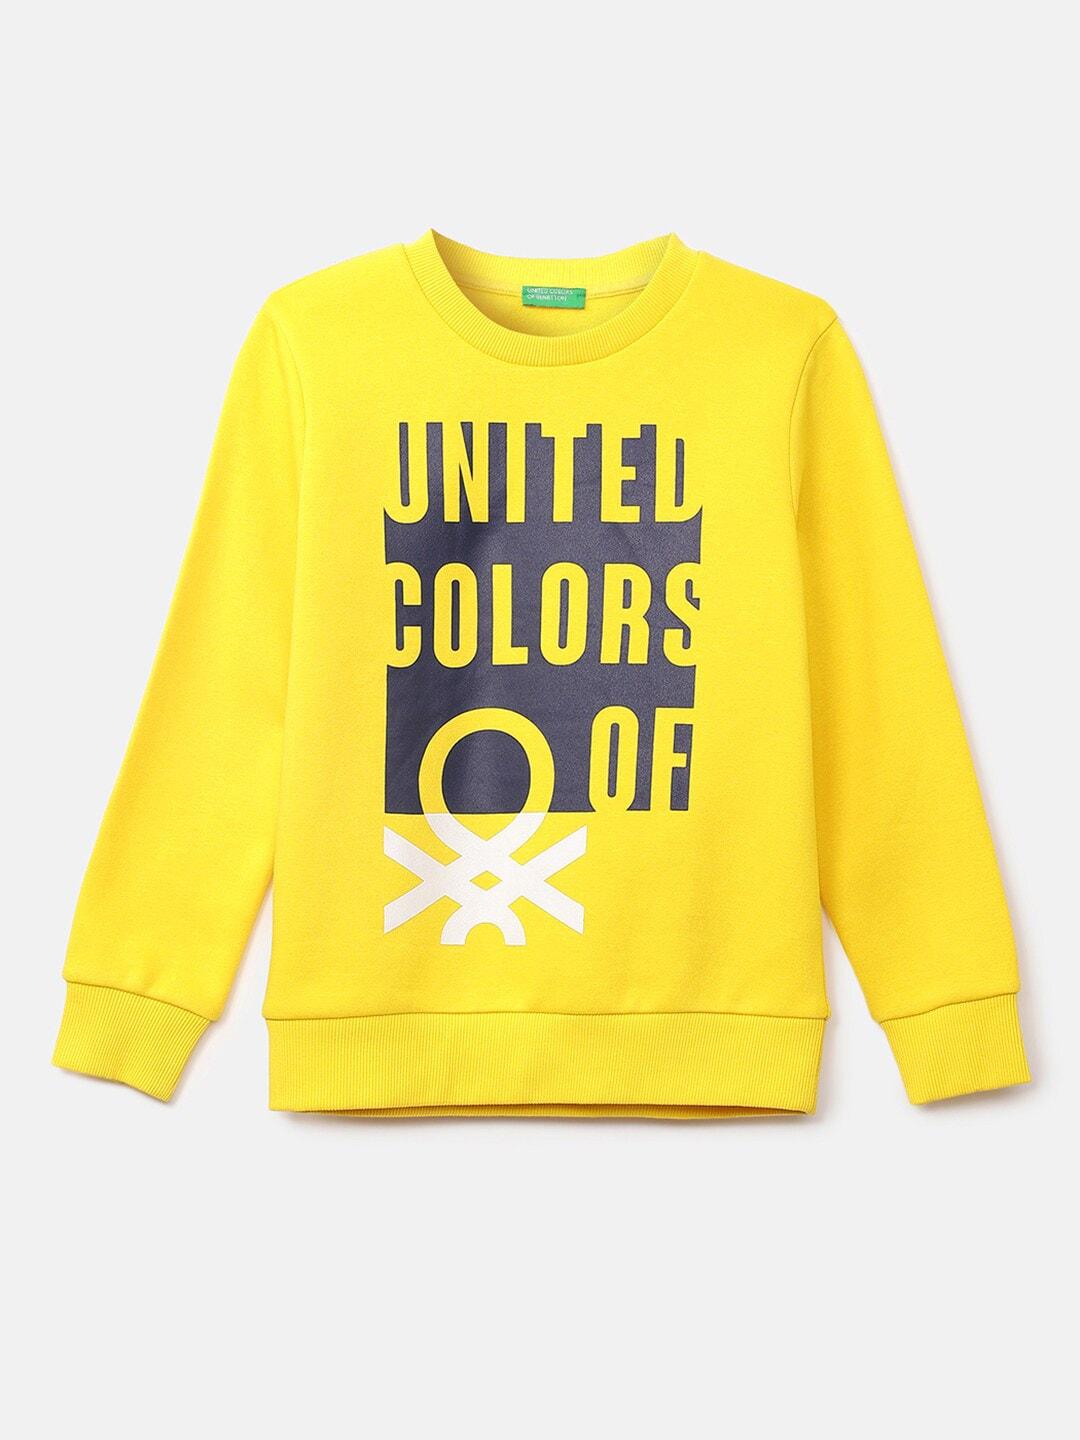 United Colors of Benetton Boys Yellow Printed Cotton Sweatshirt